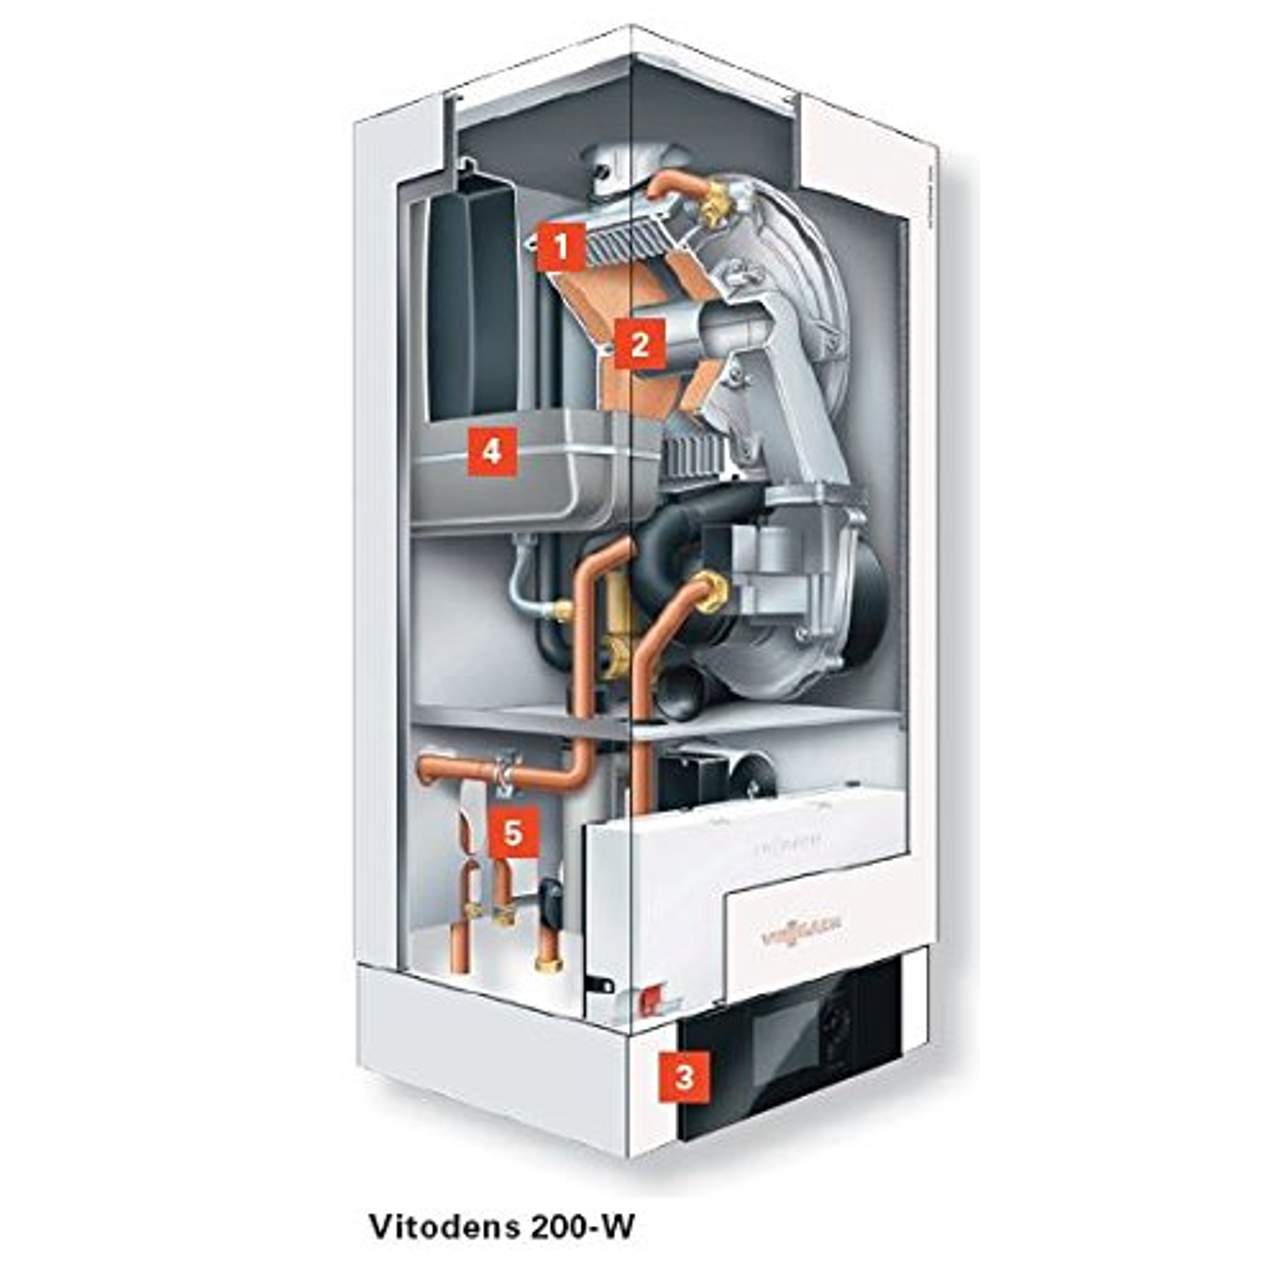 Viessmann Paket Vitodens 200-W 19 kW Gasbrennwert Therme Solar Vitososl